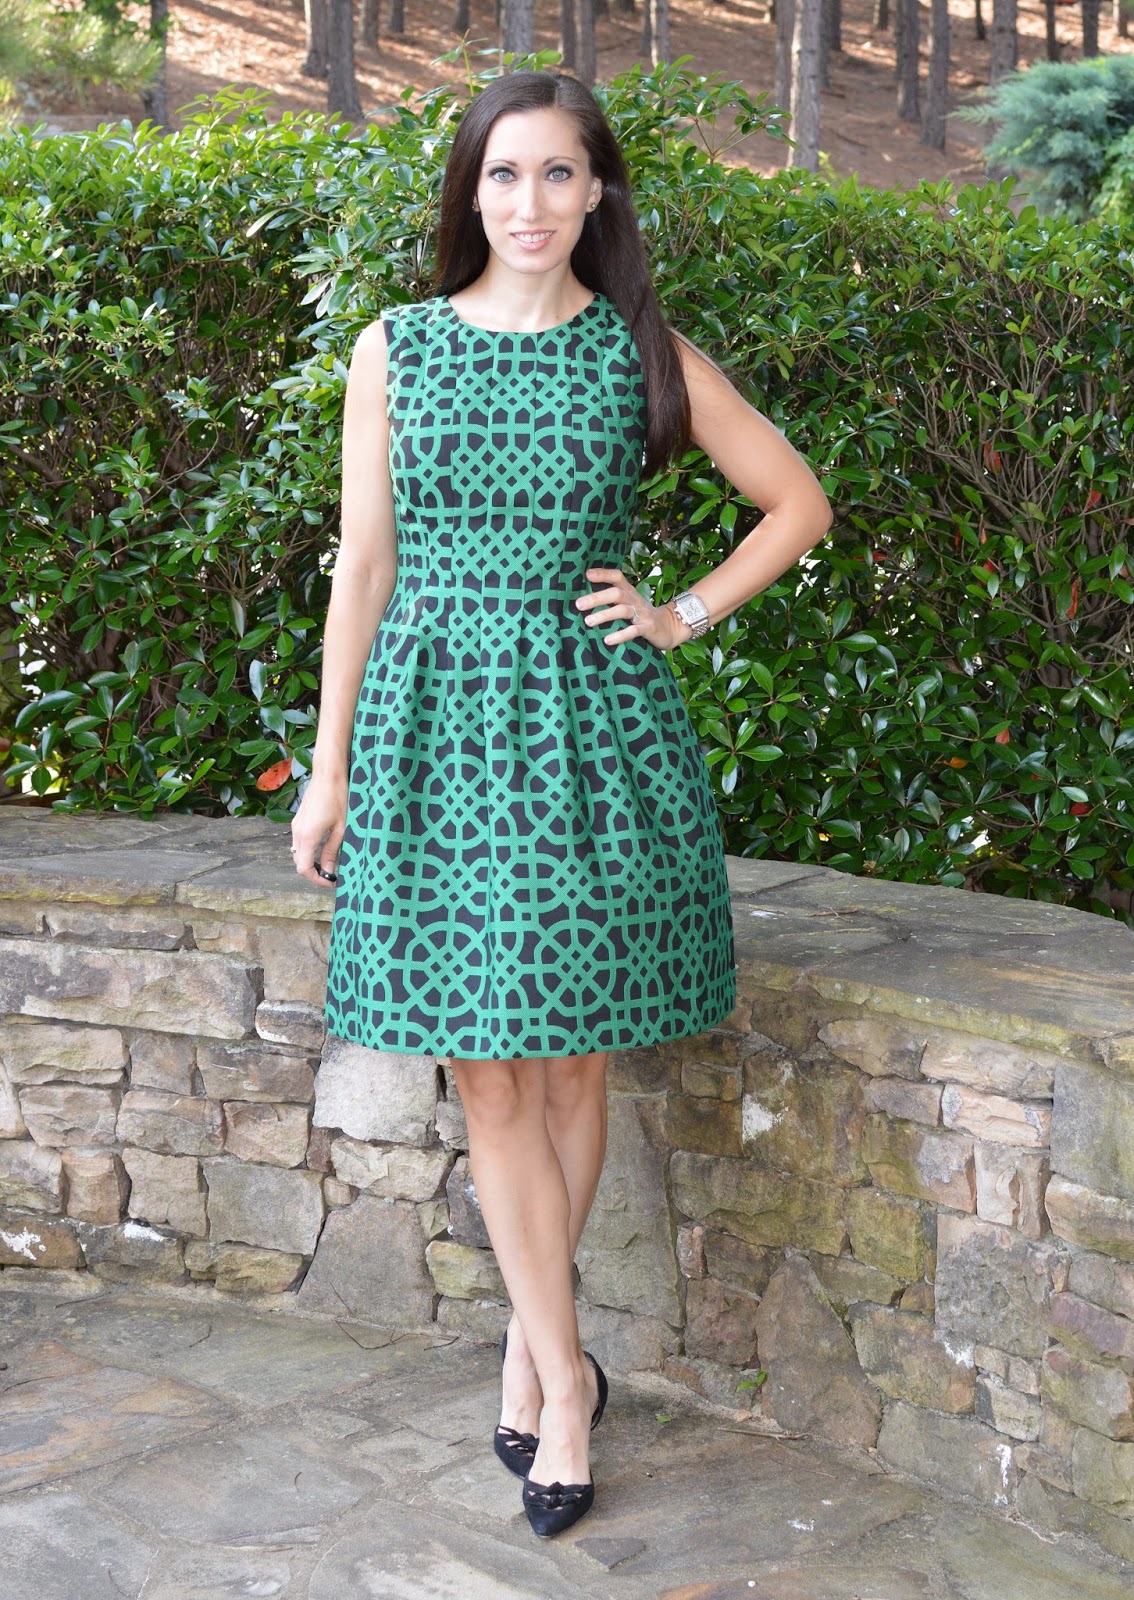 Everyday Fashionista - Atlanta Blogger: $20 a Dress